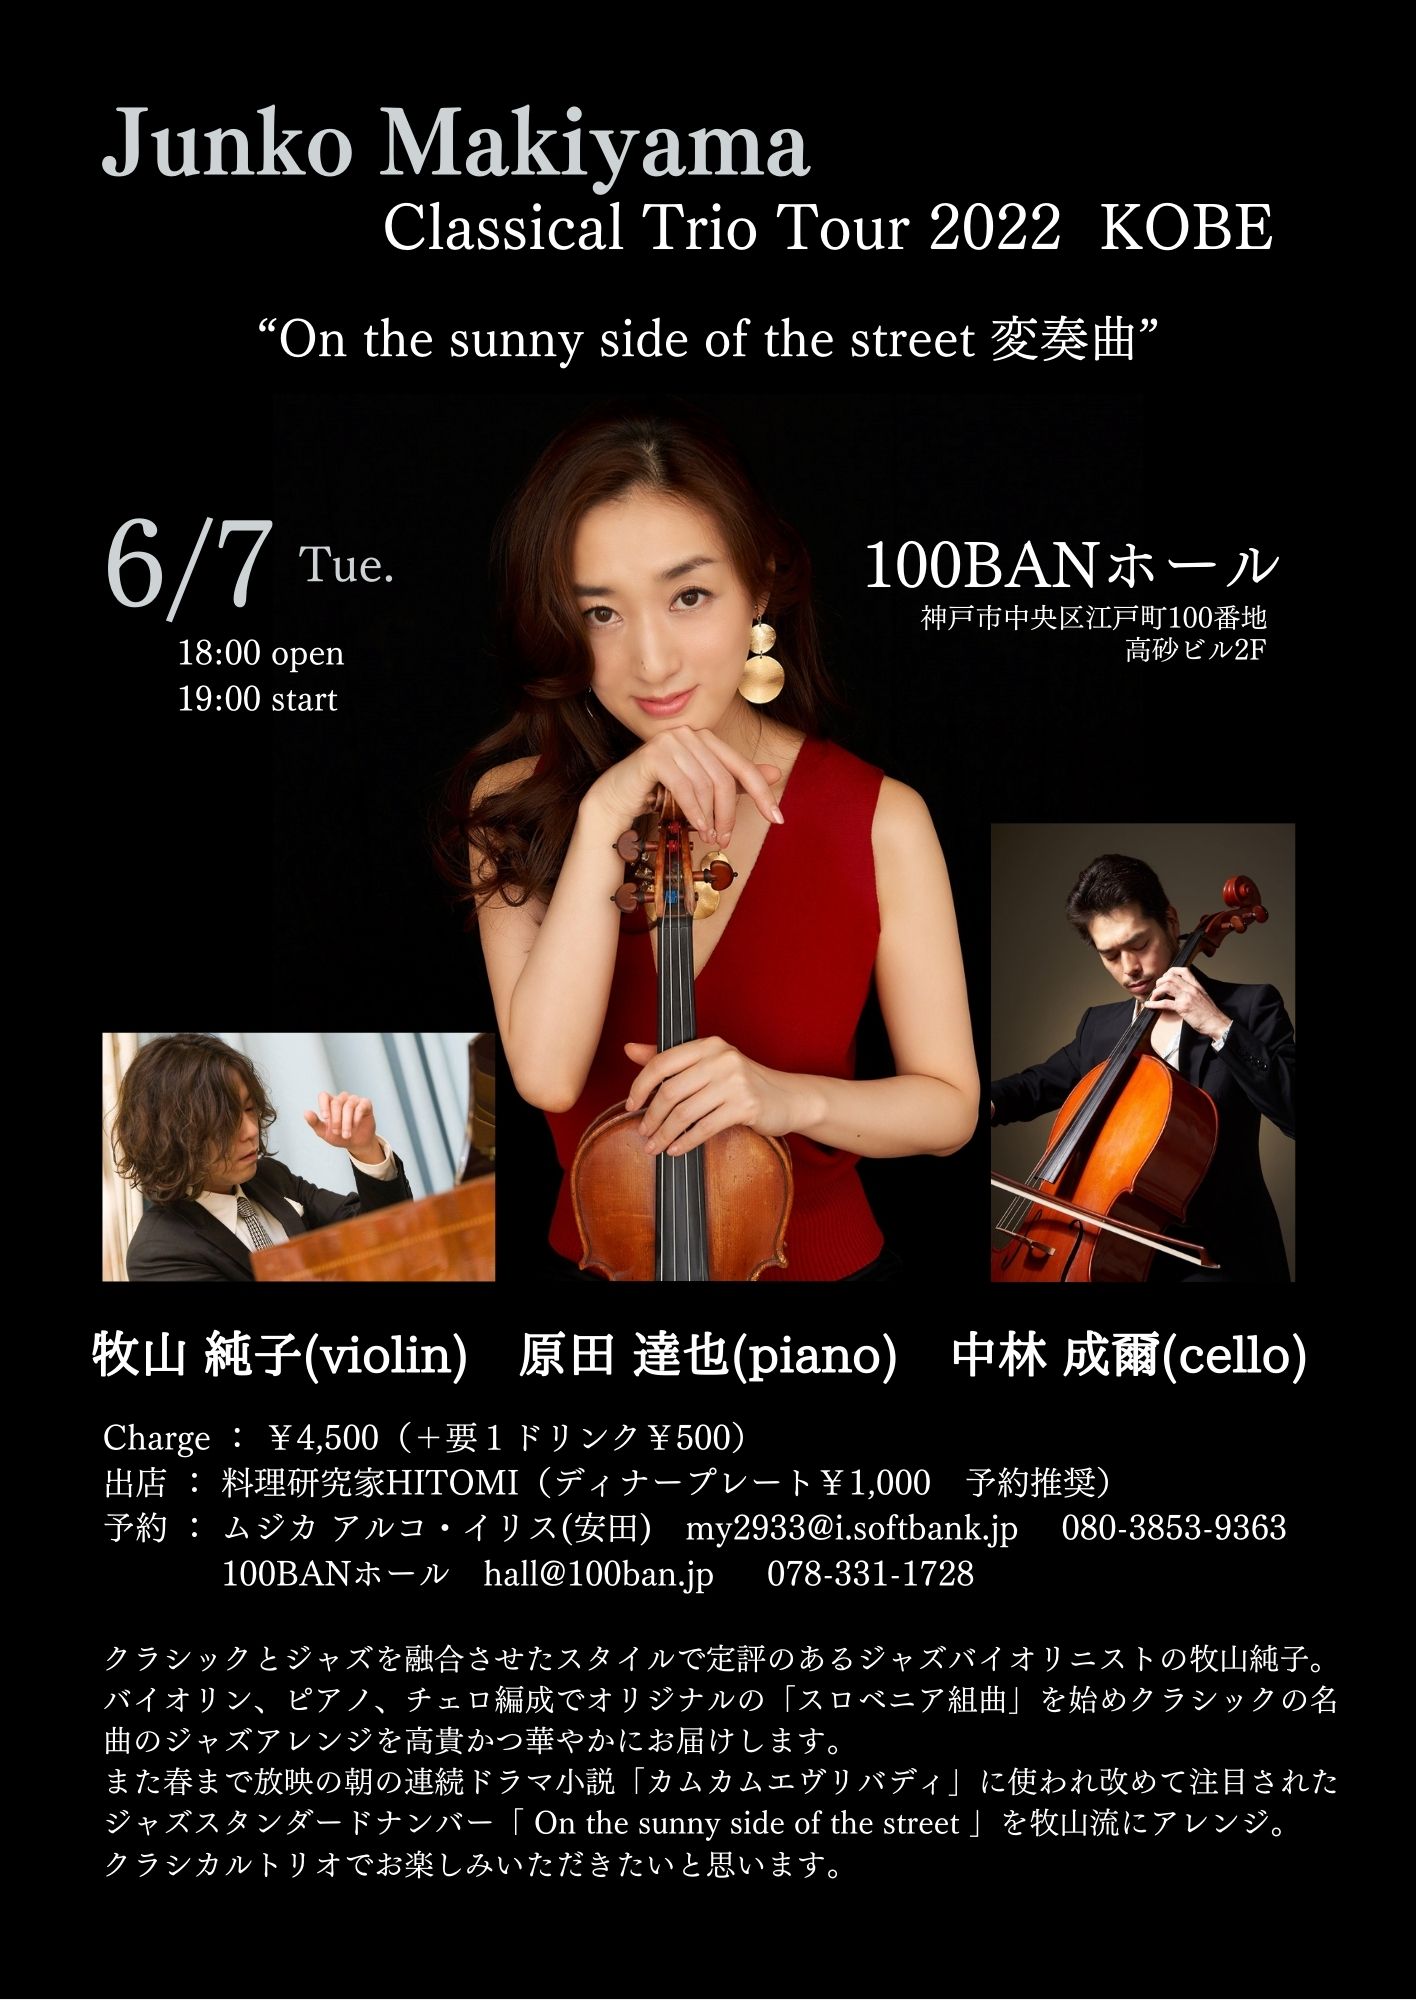 On the sunny side of the street 変奏曲 - Junko Makiyama Classical